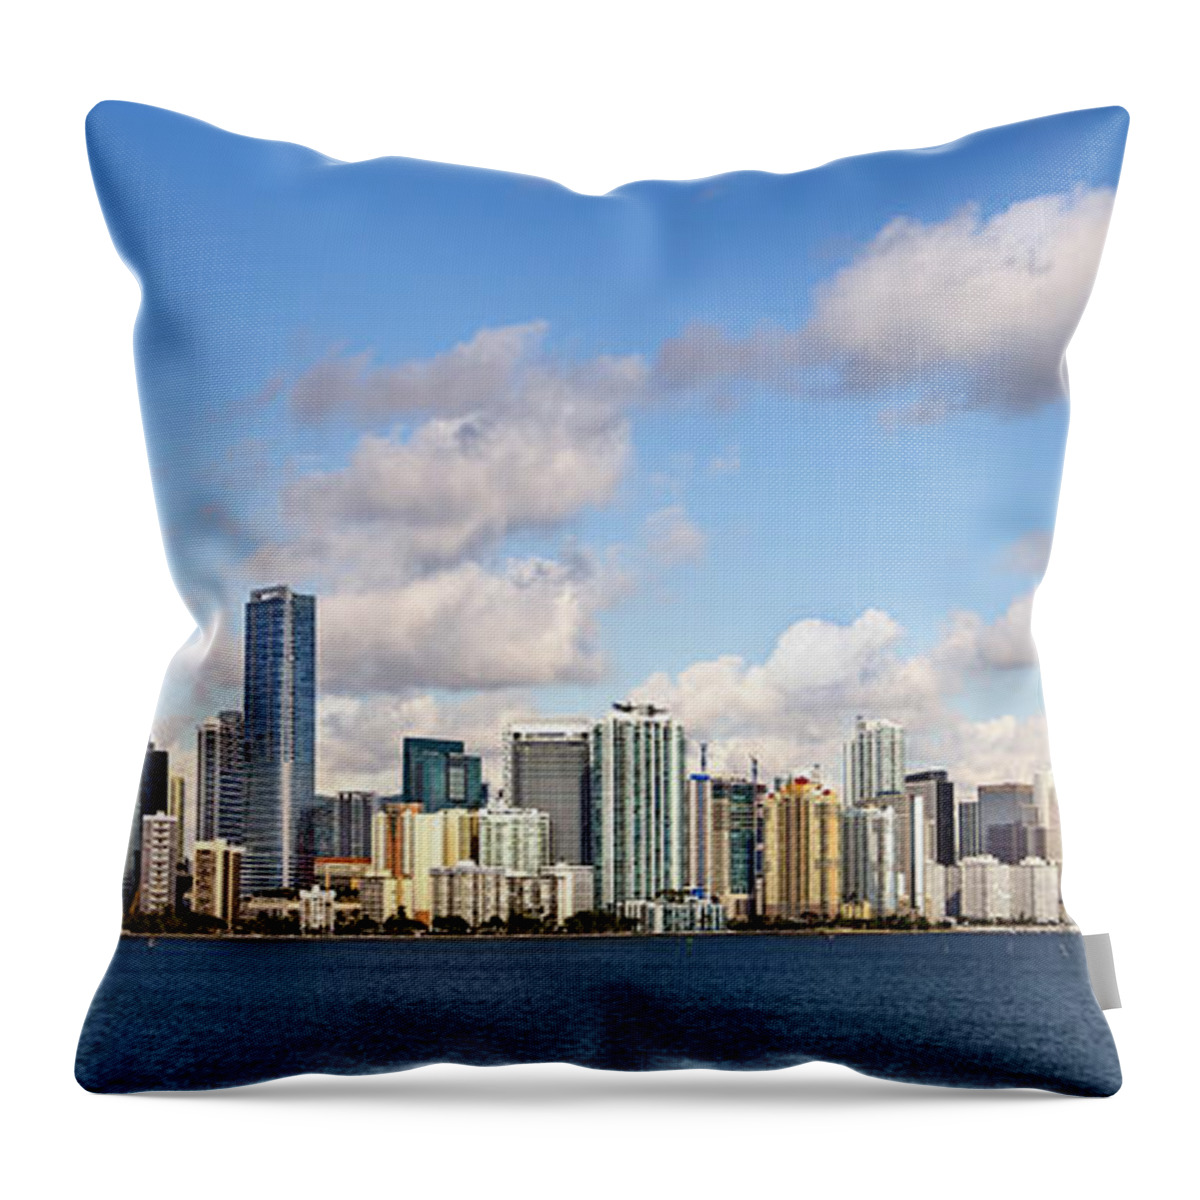 Miami Throw Pillow featuring the photograph Miami Heat by Evelina Kremsdorf